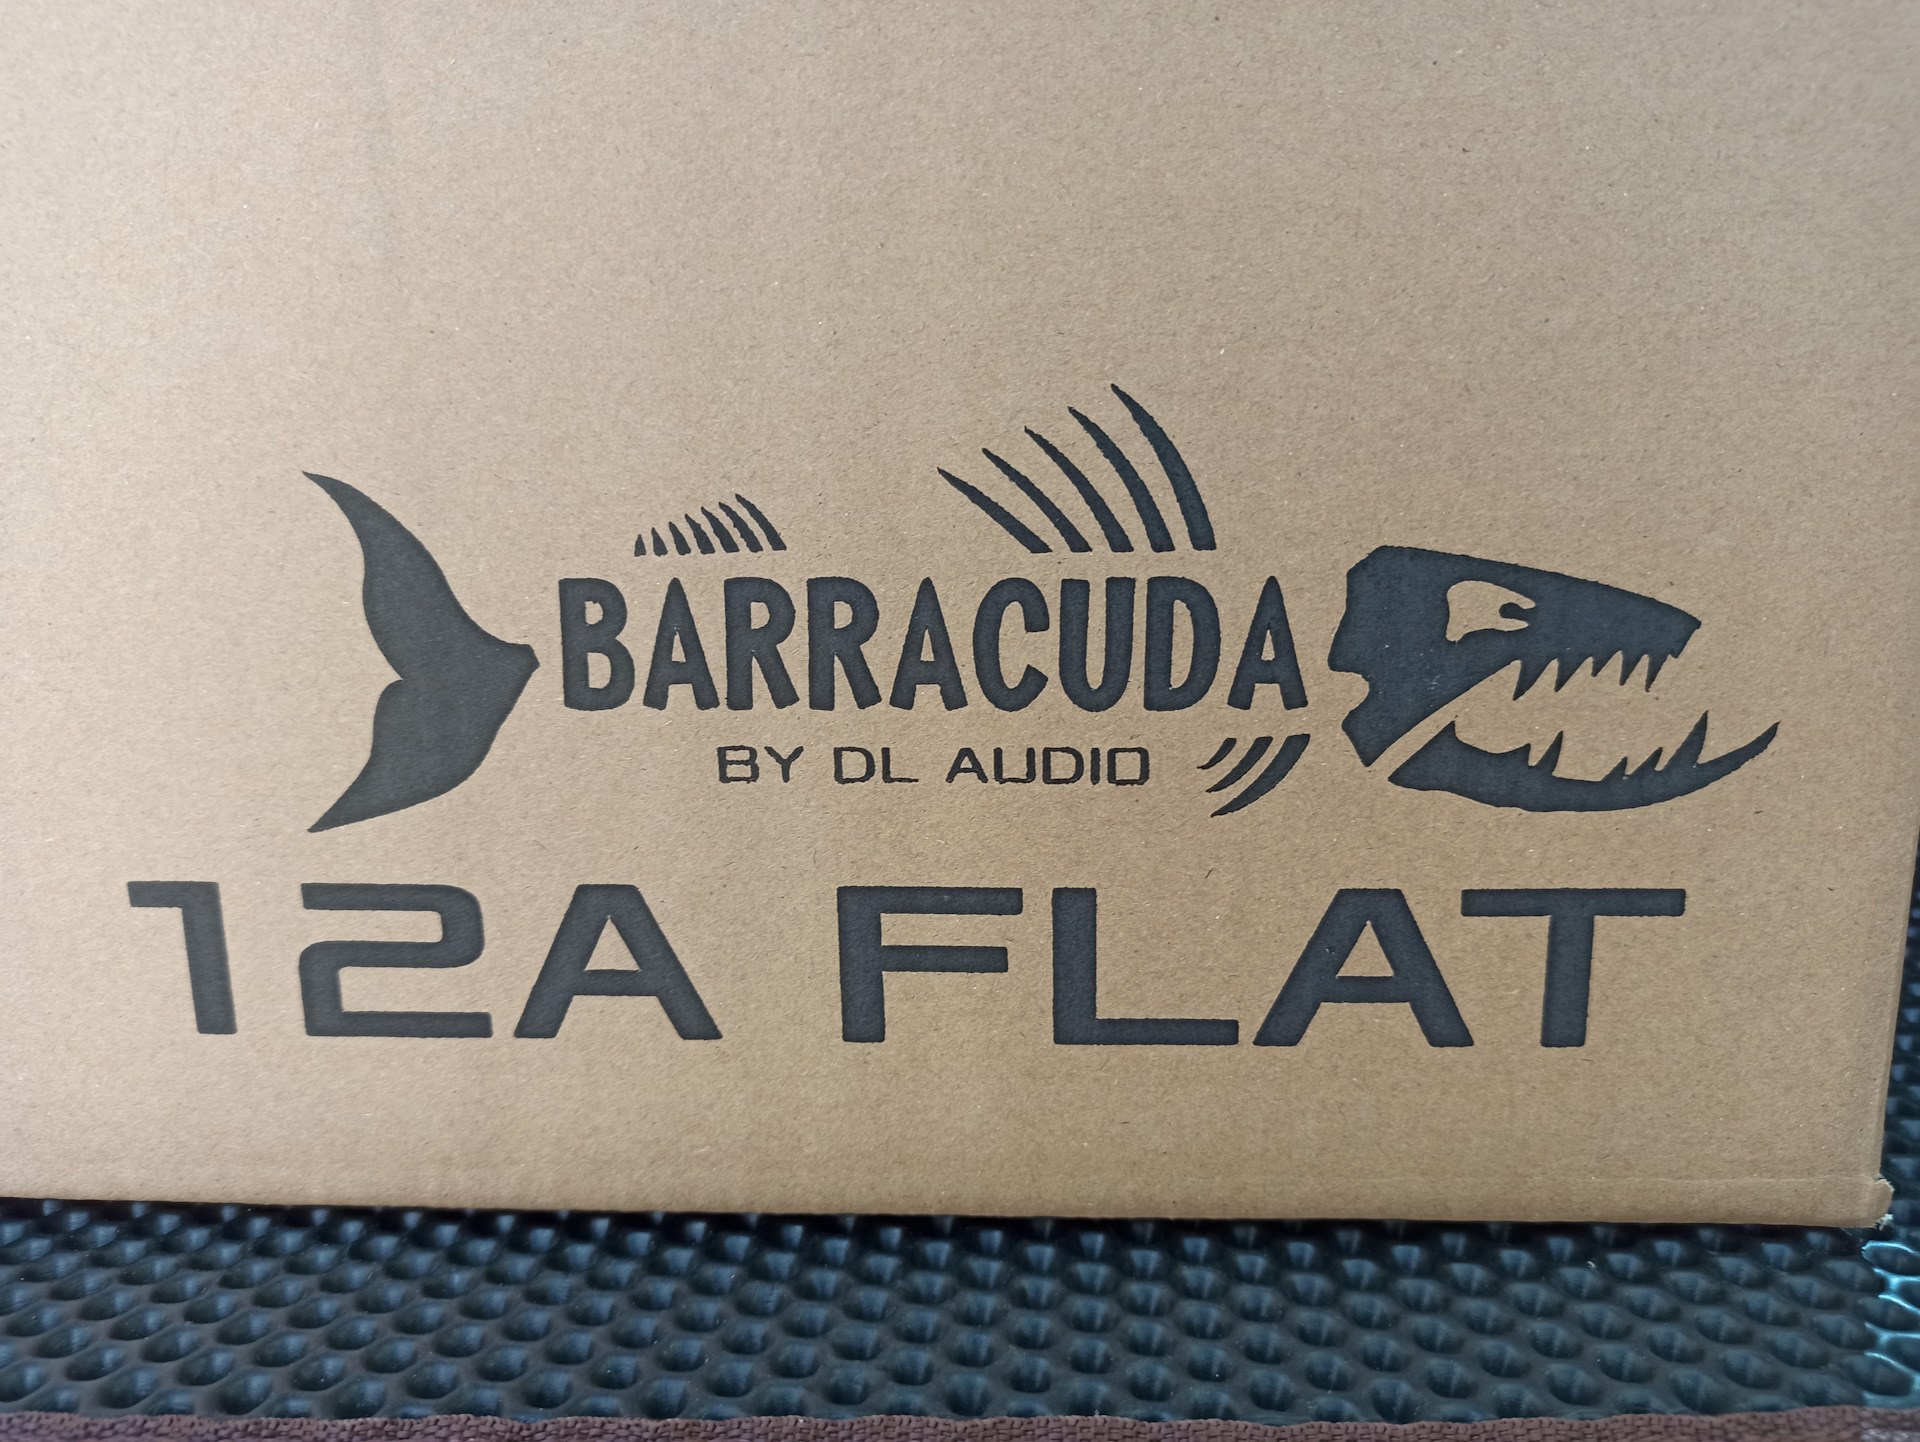 Барракуда 12а Флат. DL Audio Barracuda 12a Flat. DL Audio Barracuda. Barracuda Flat Design. Barracuda 10 flat